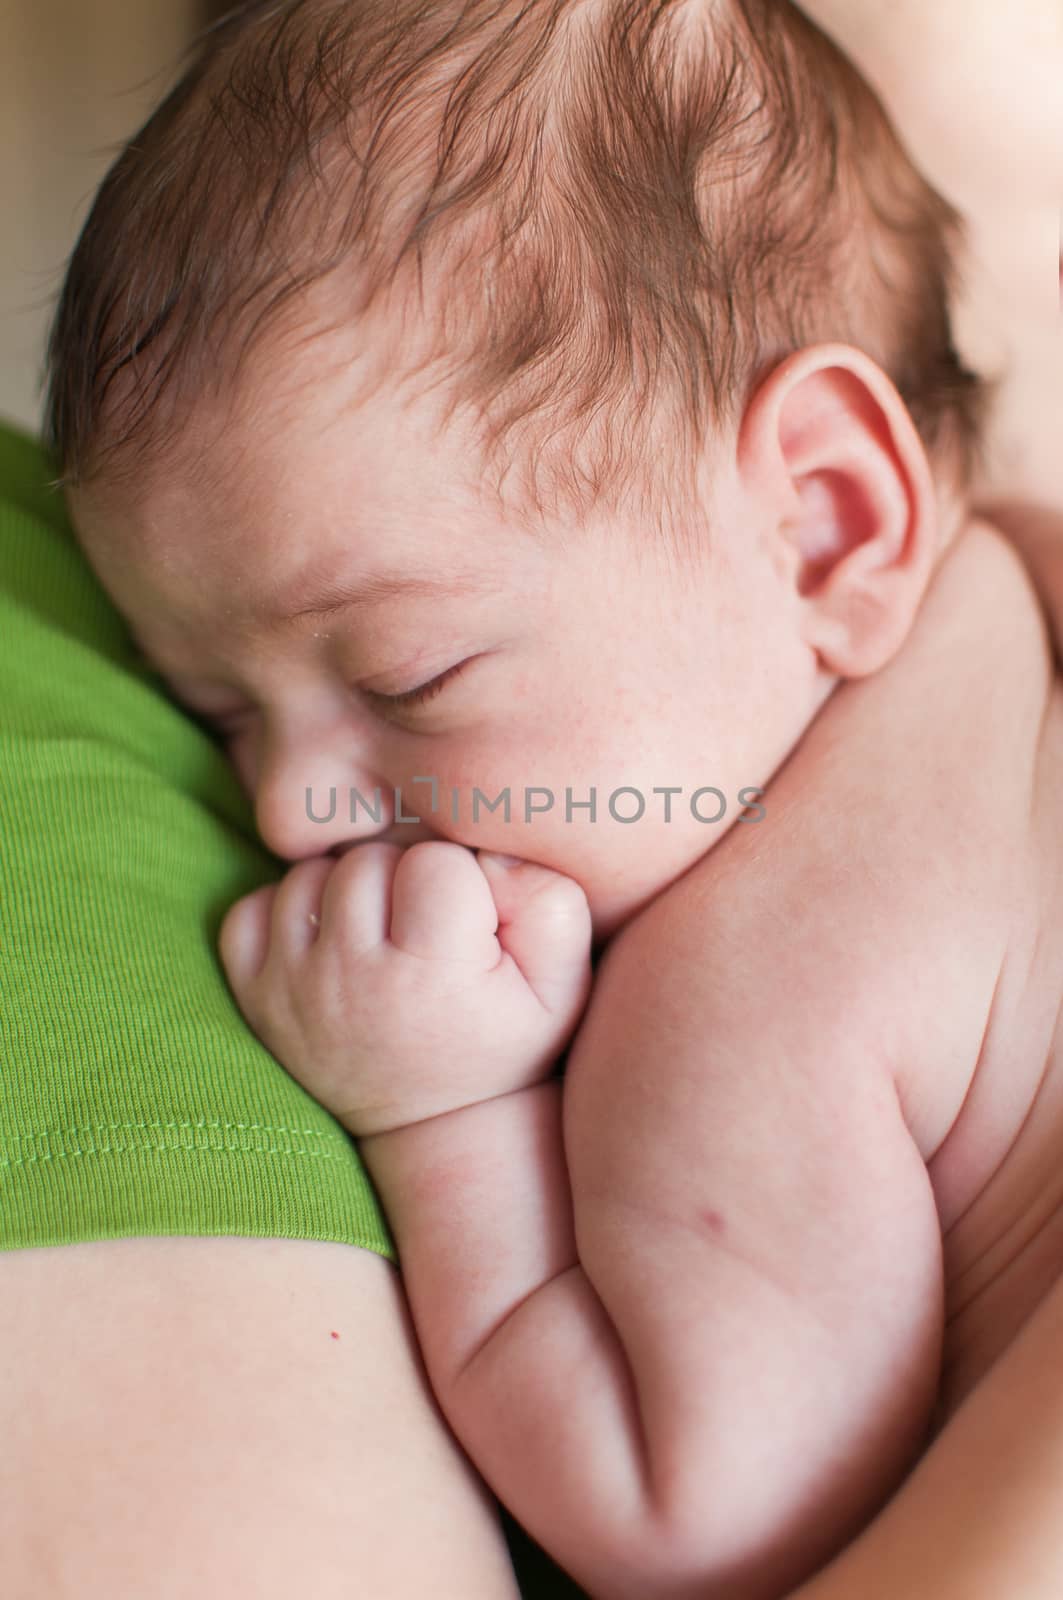 Closeup vertical portrait of the sleeping baby